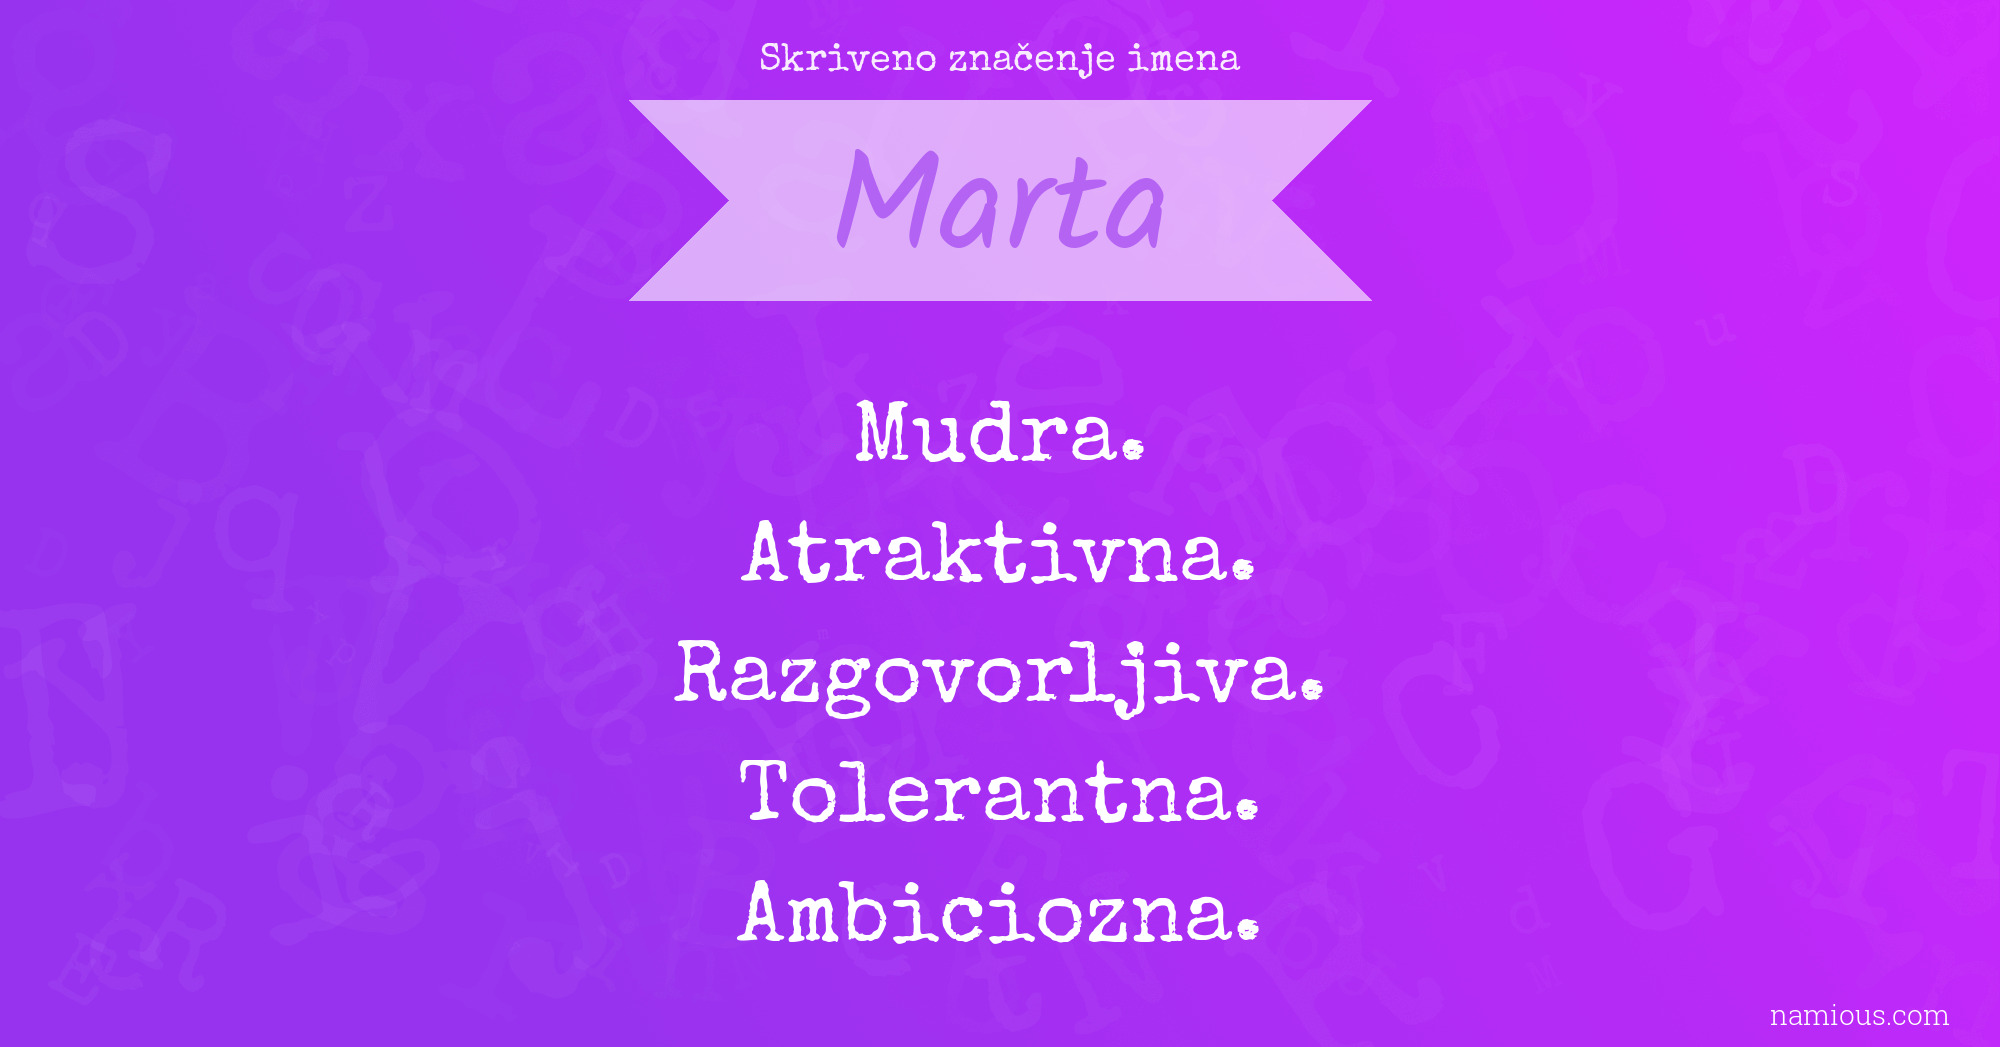 Skriveno značenje imena Marta | Namious